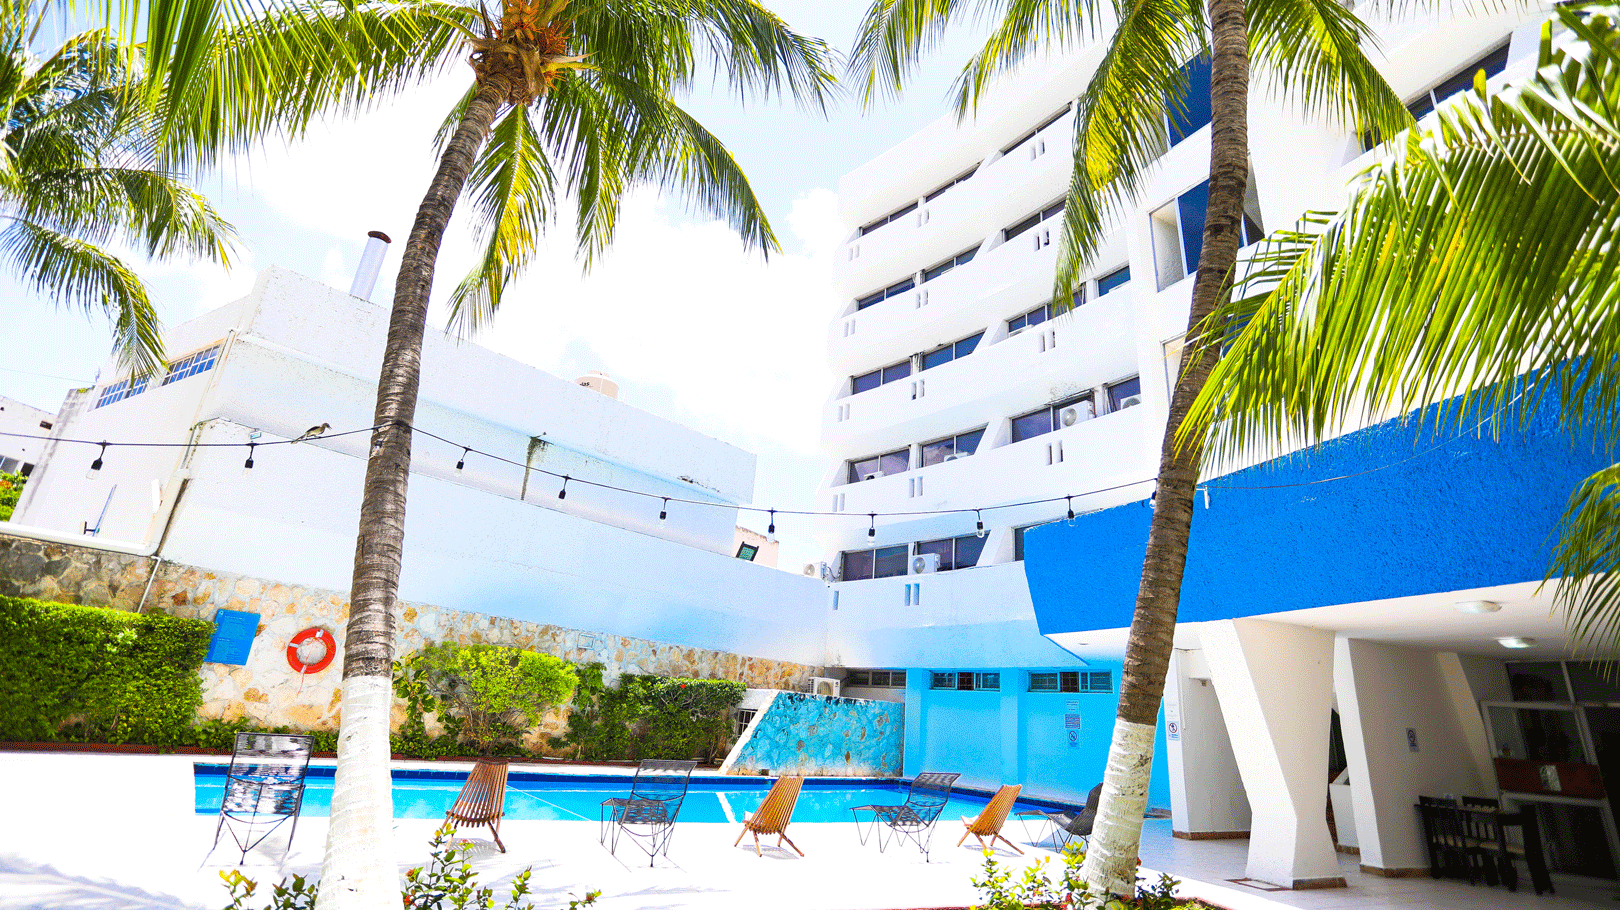 Hotel Caribe Internacional